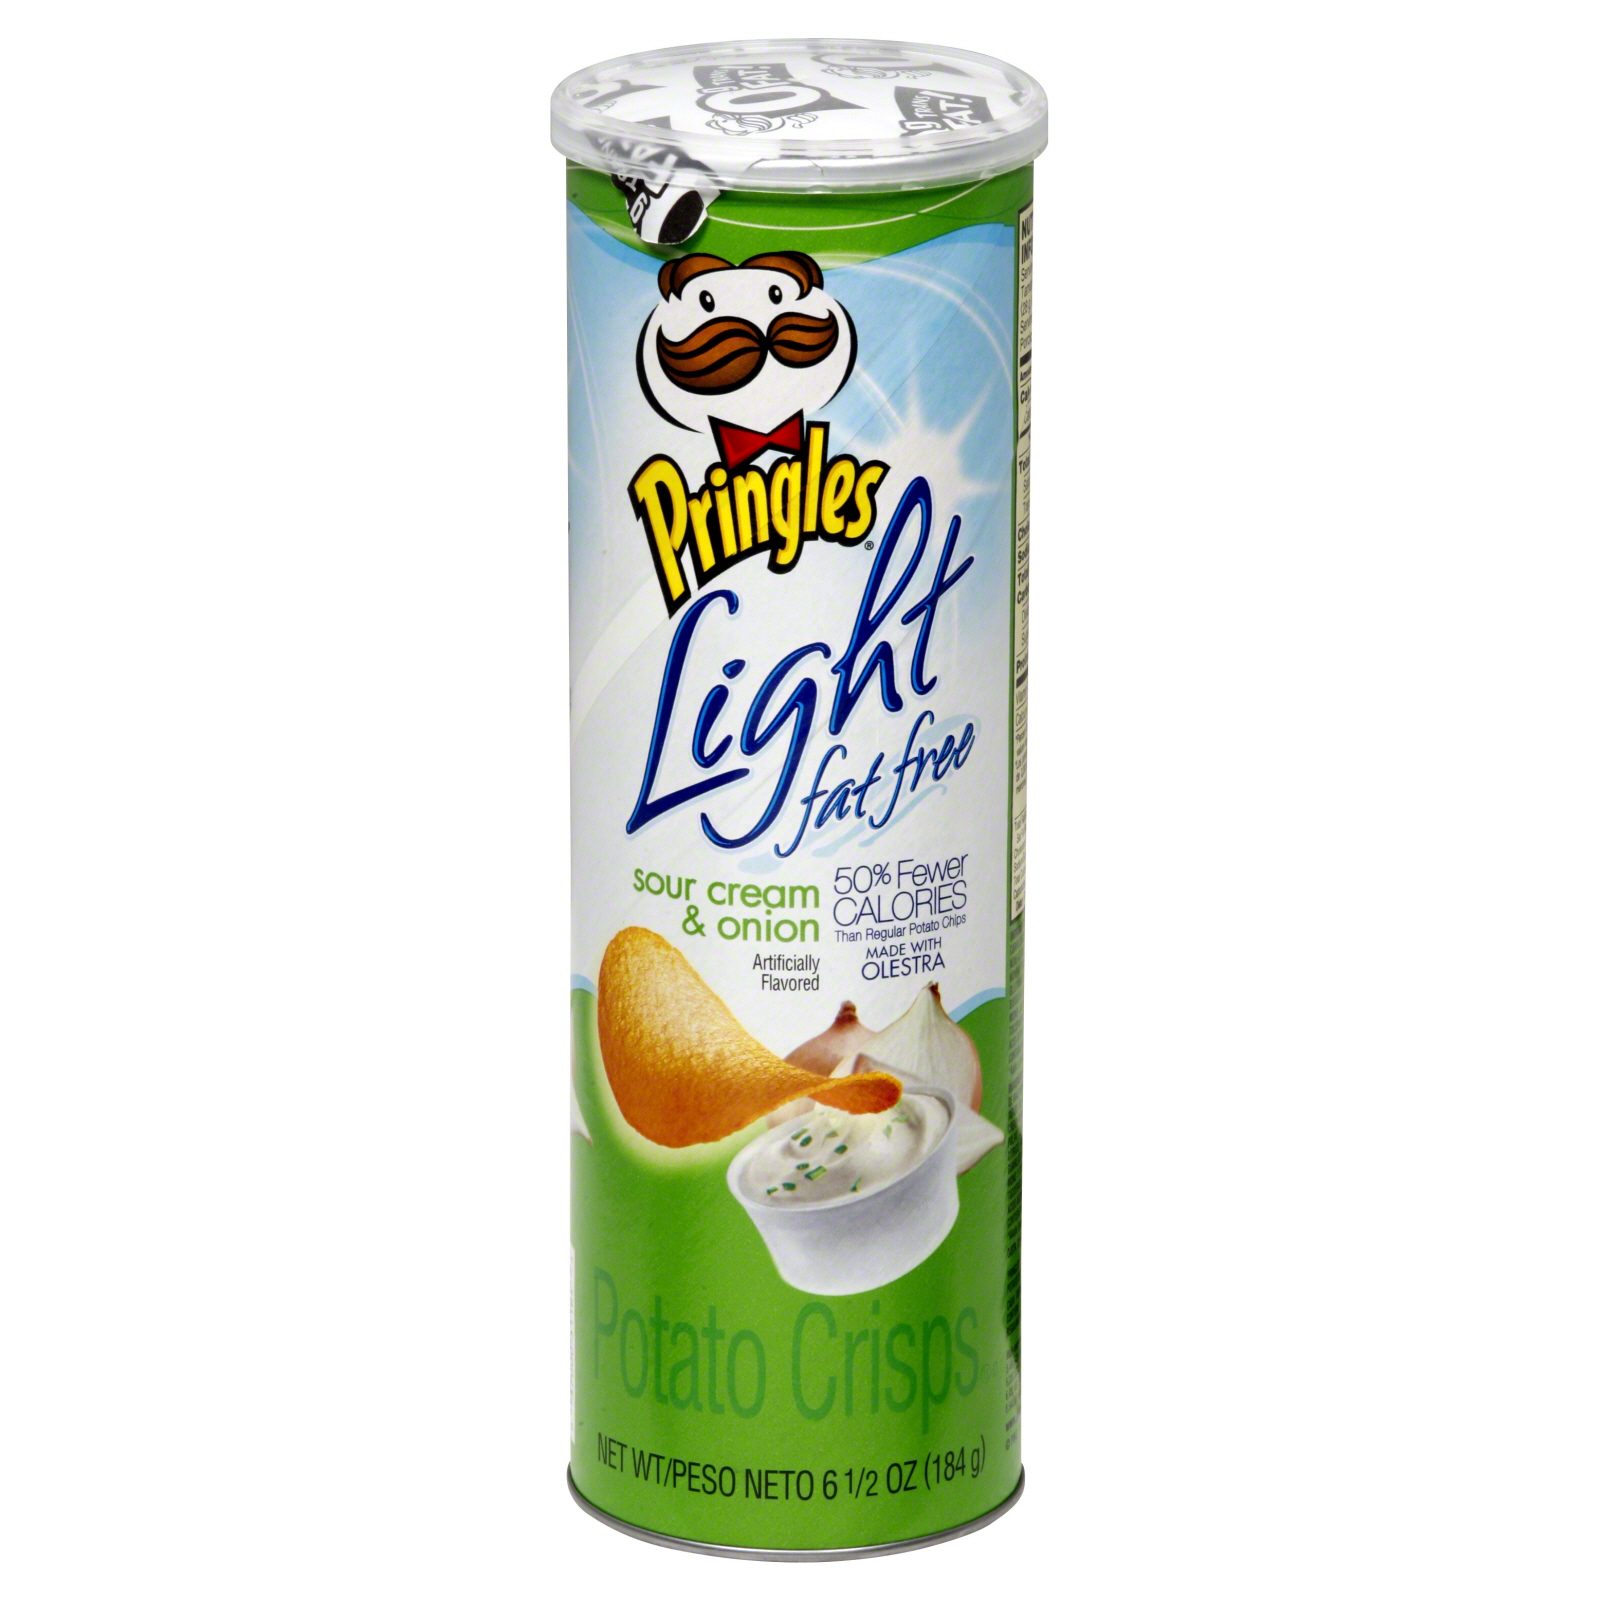 Pringles Light Potato Crisps, Fat Free, Sour Cream & Onion, 6.5 oz (184 g)